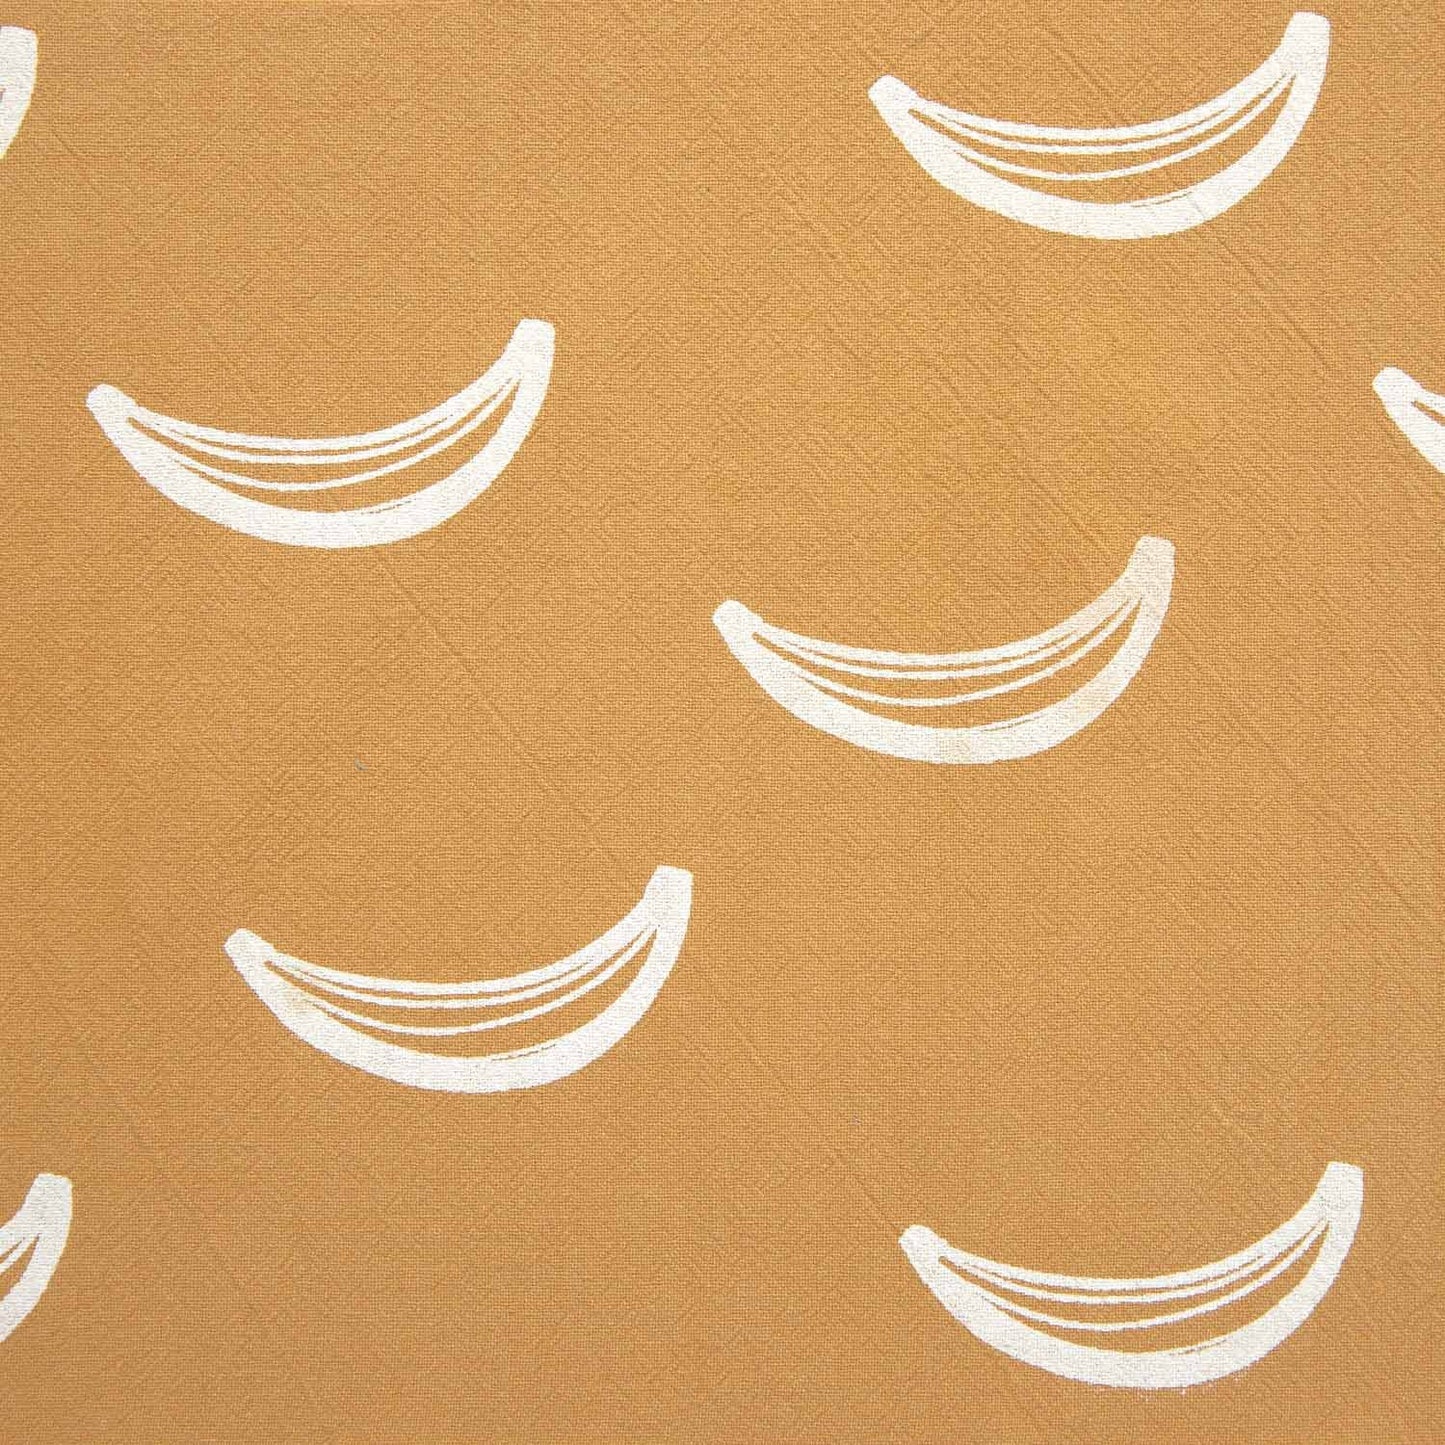 Banana Jump - Mustard - Rustic Cotton